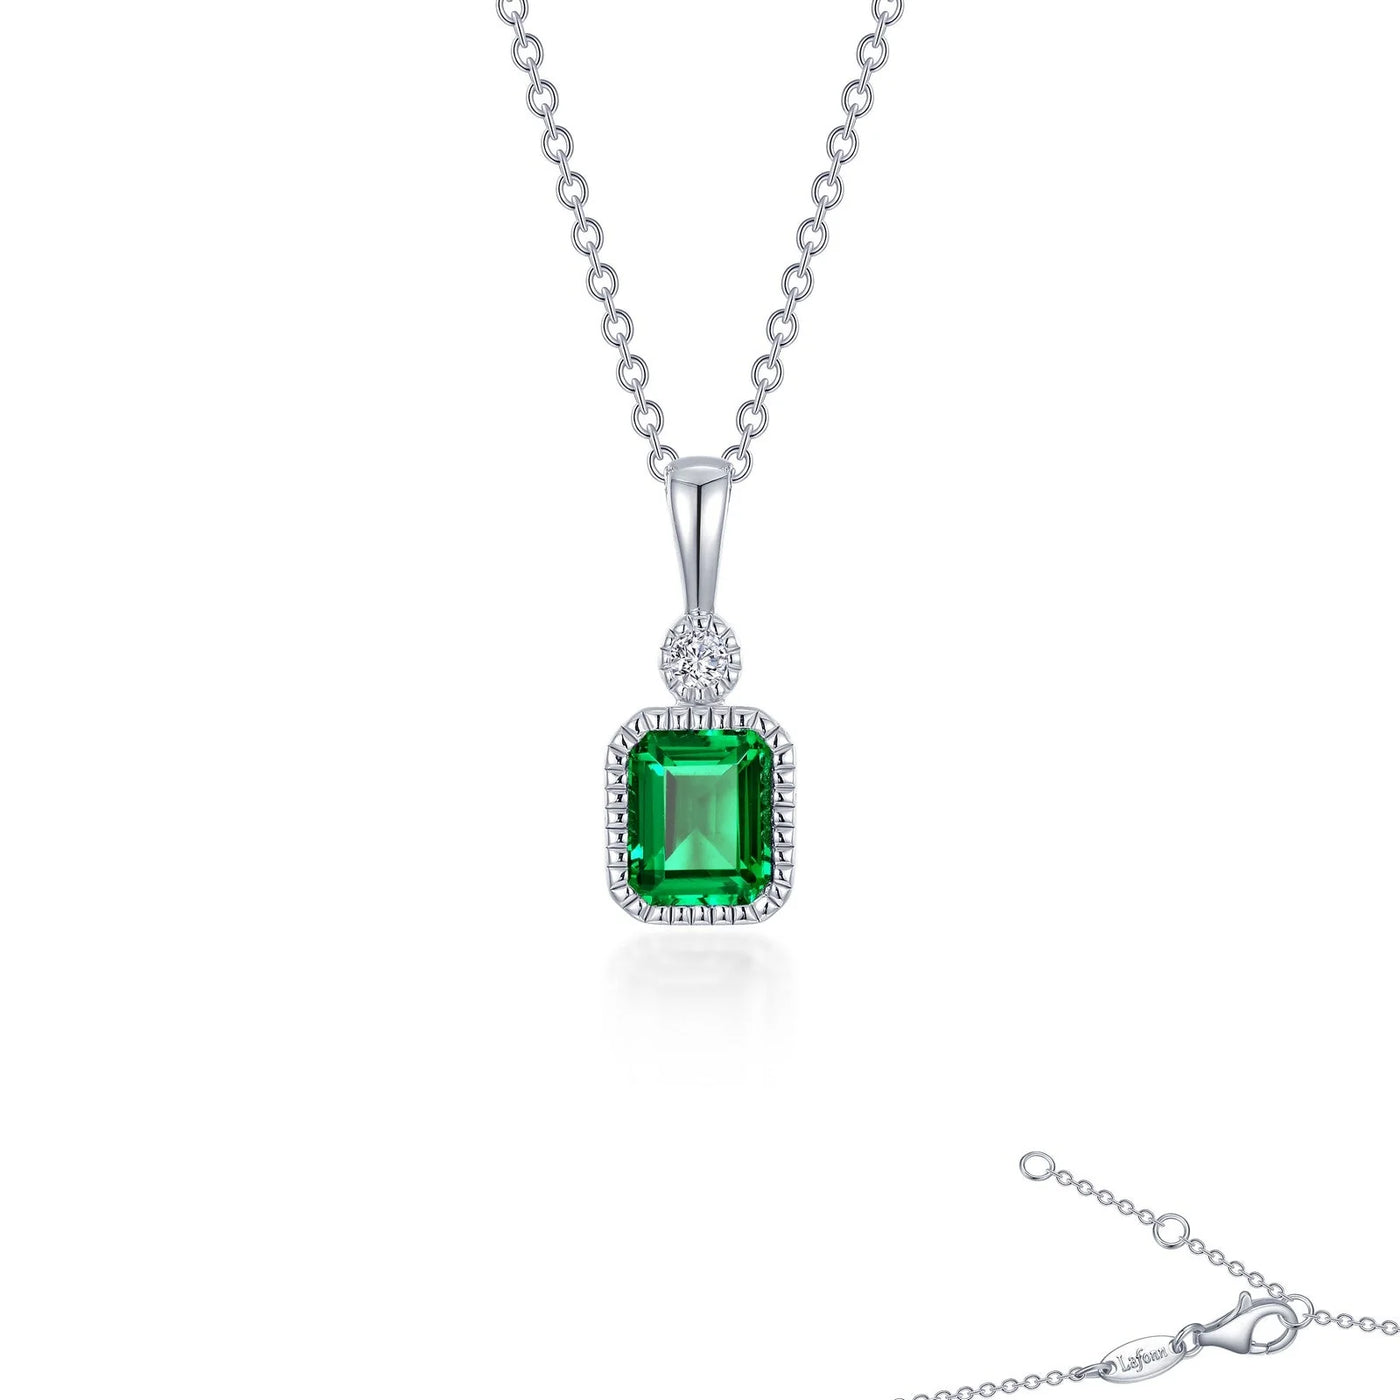 Simulated Emerald-Cut Emerald & Diamond May Birthstone Necklace